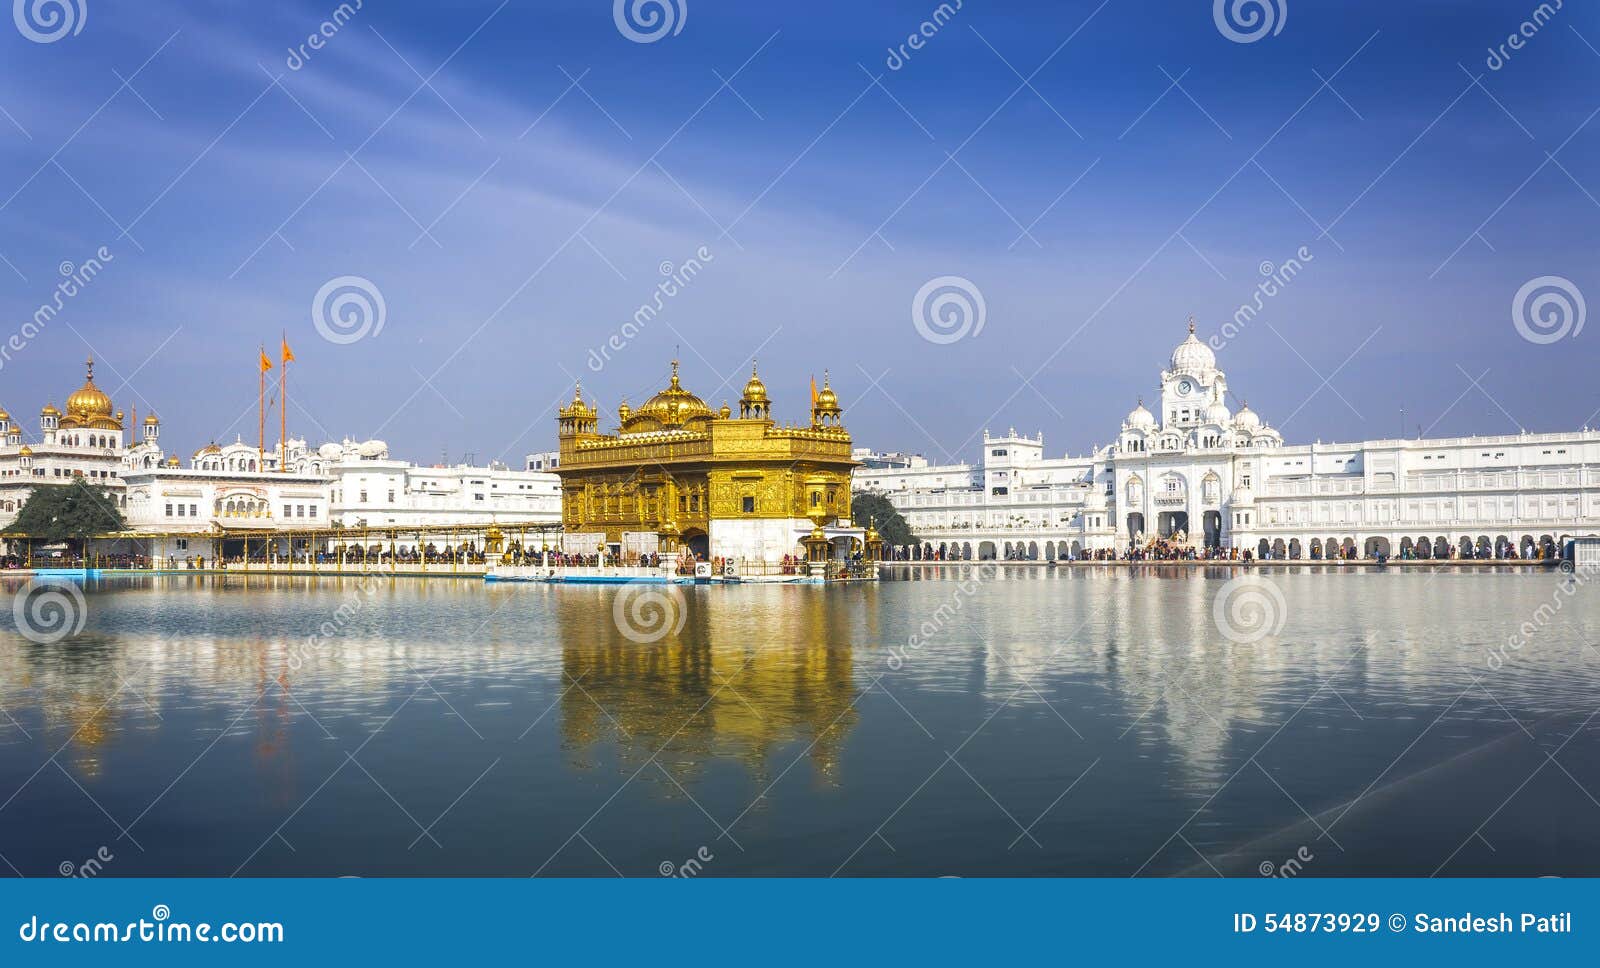 golden temple india